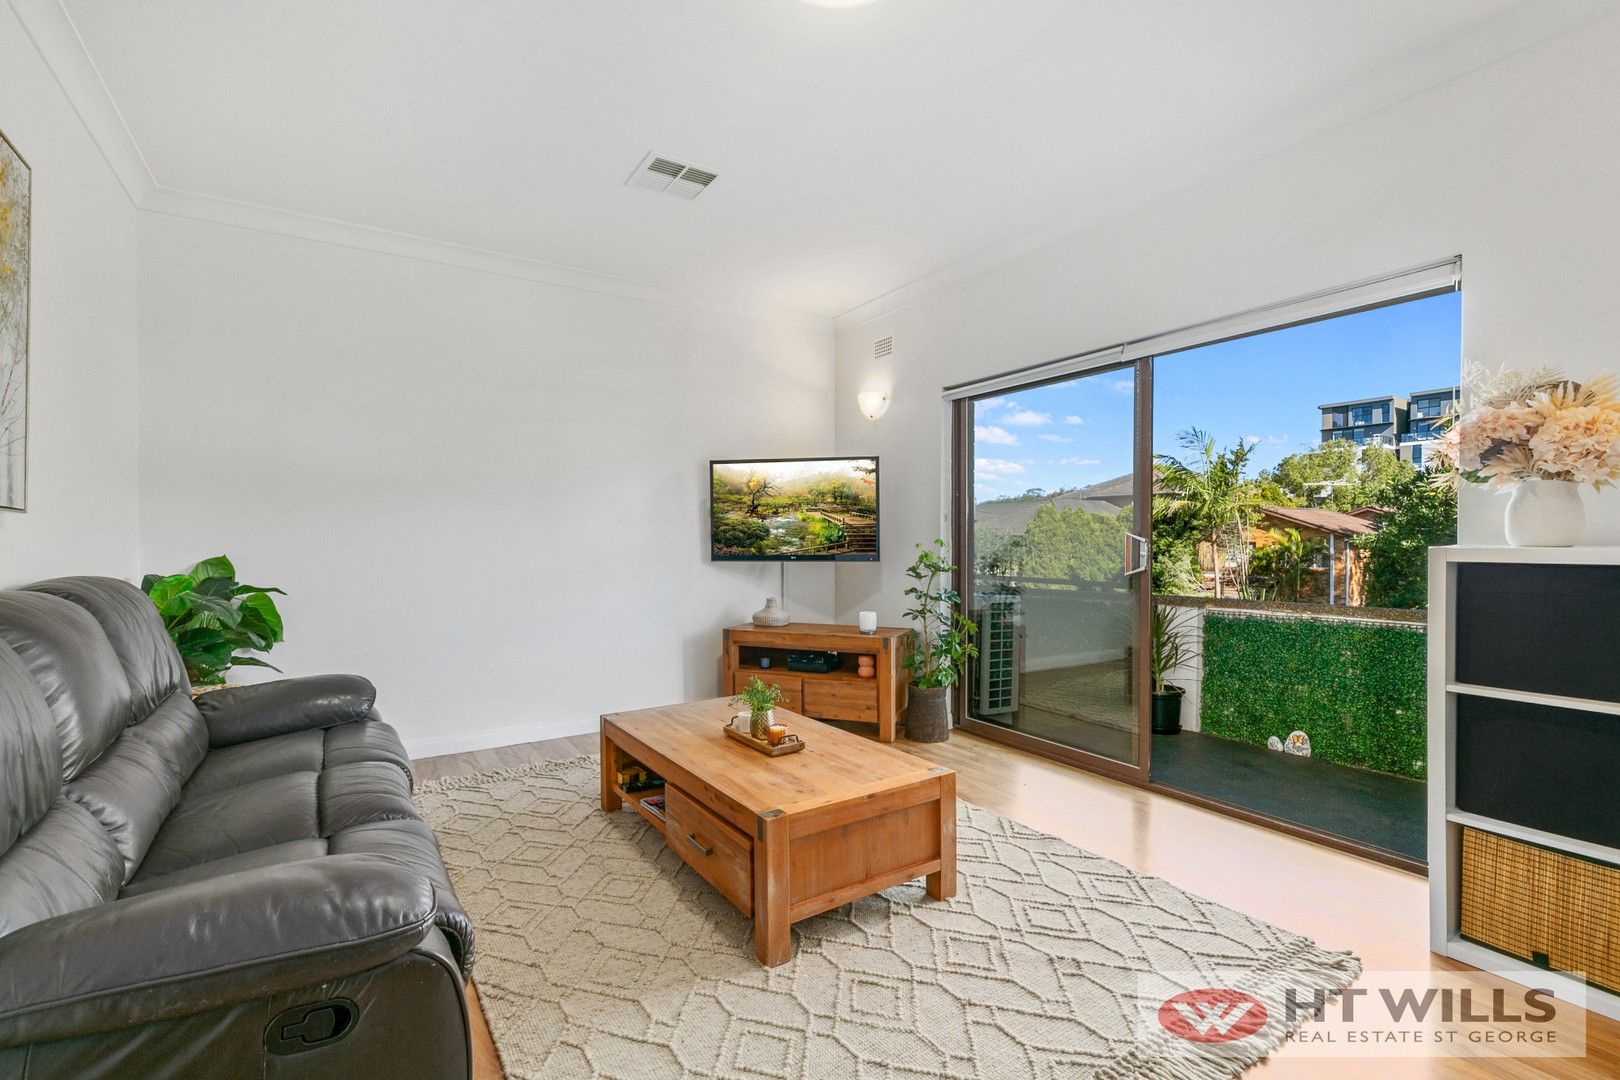 2 bedrooms House in 4/6 Rossi Street SOUTH HURSTVILLE NSW, 2221